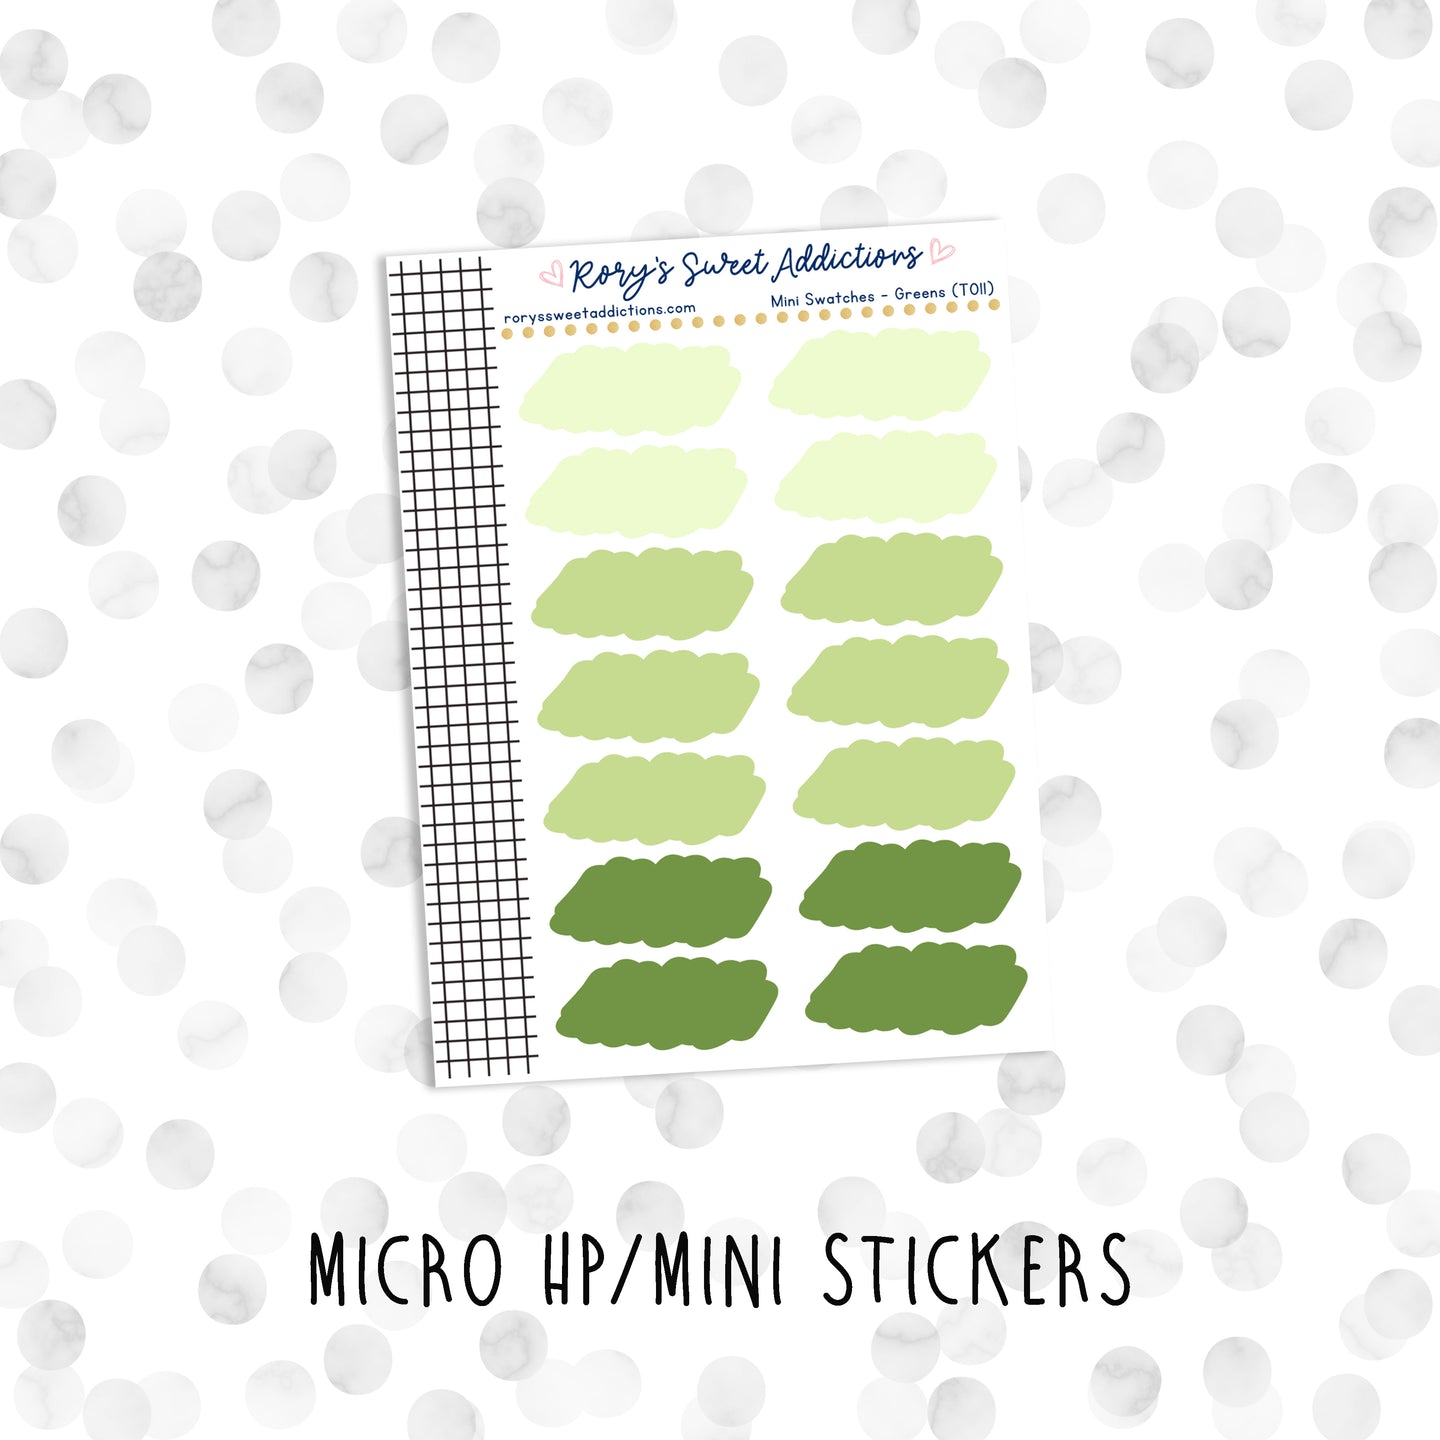 Mini Swatches - Greens // Micro HP - Mini Stickers